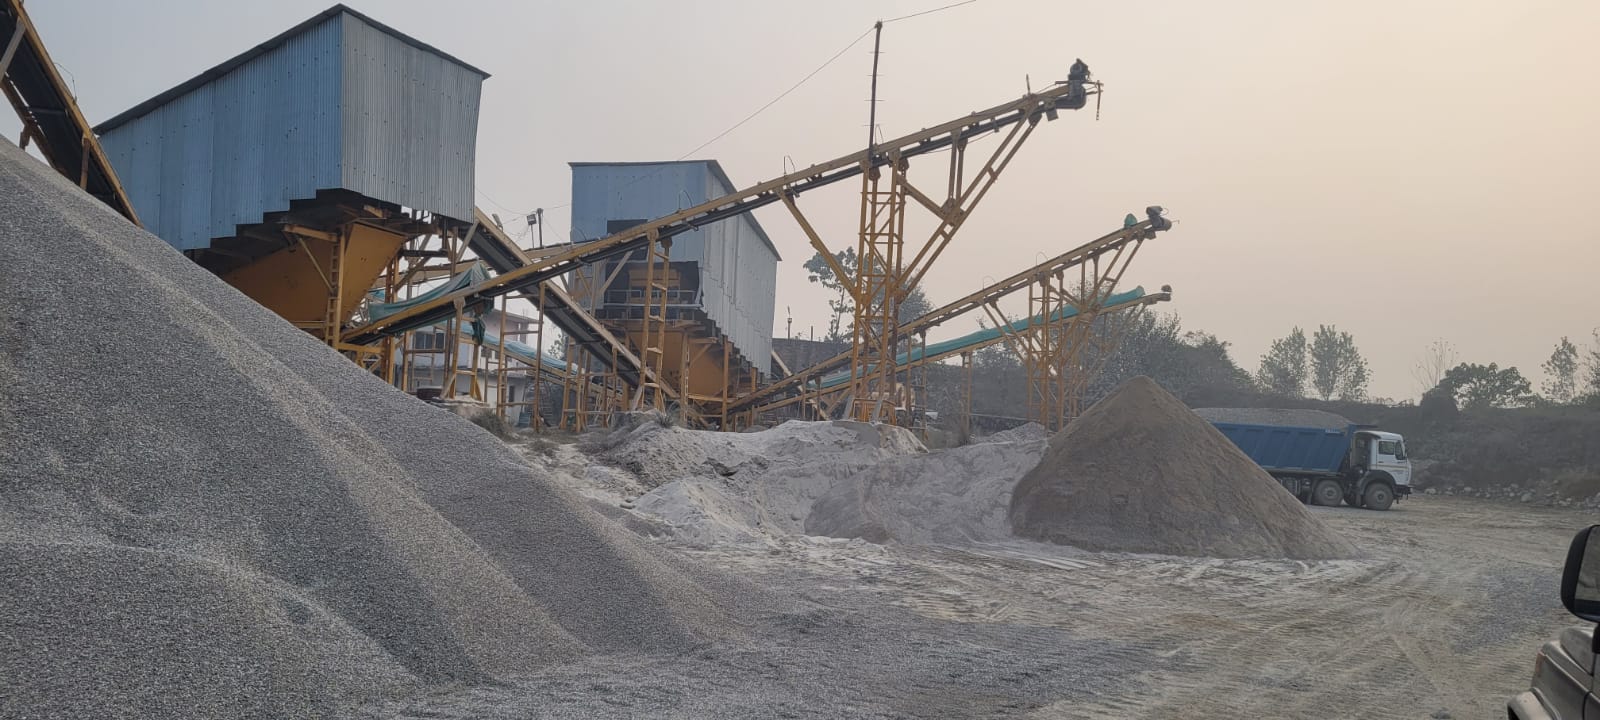 stone crusher siege in haridwar over illegal mining